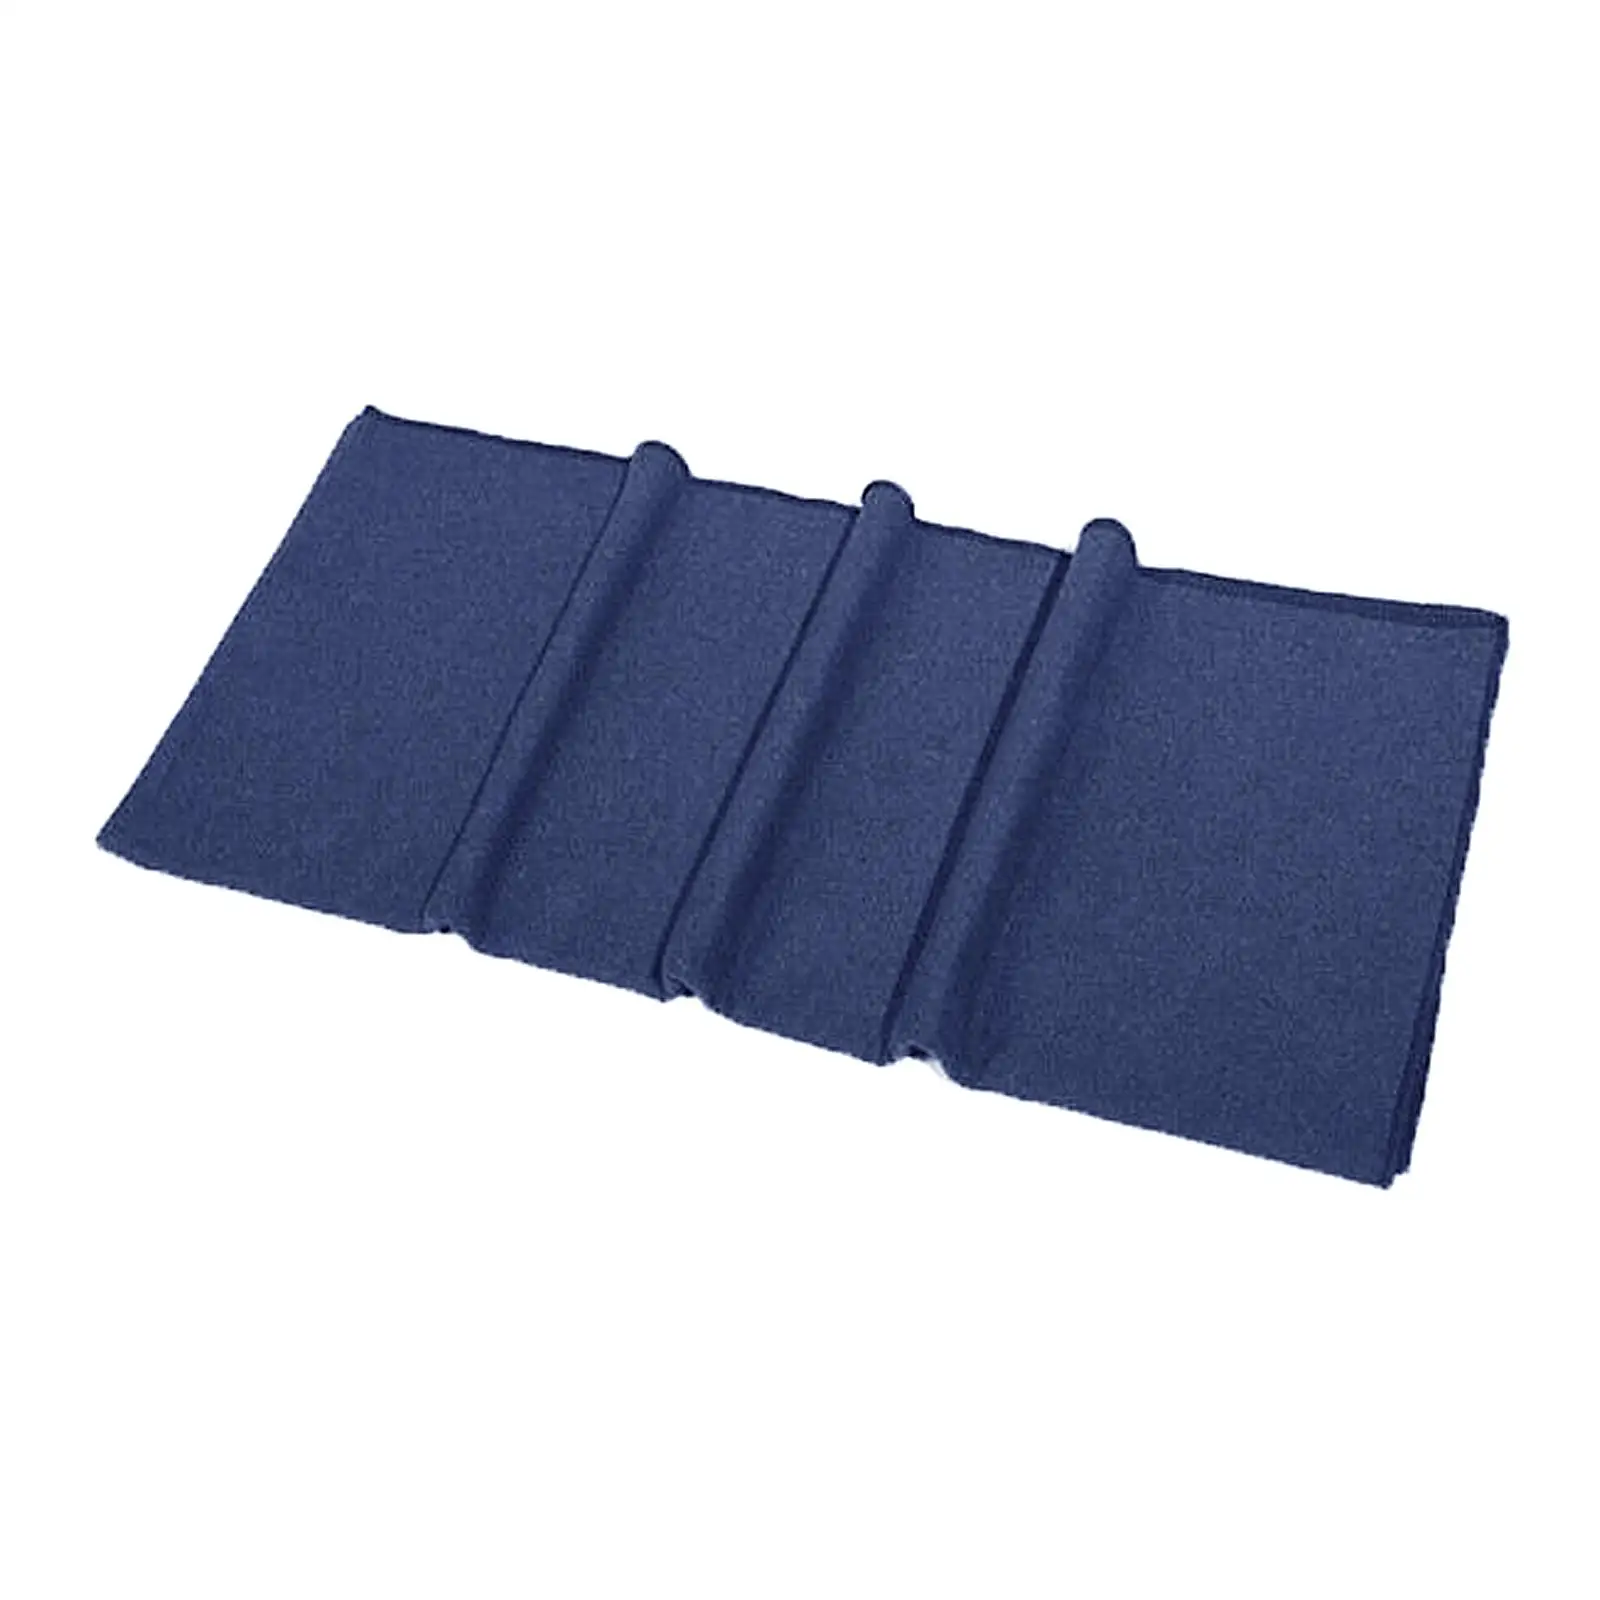 200x150cm Foldable Yoga Meditation Blanket Travel Camping Blanket Yoga Equipment Soft Comfortable Non Slip Fitness Accessory